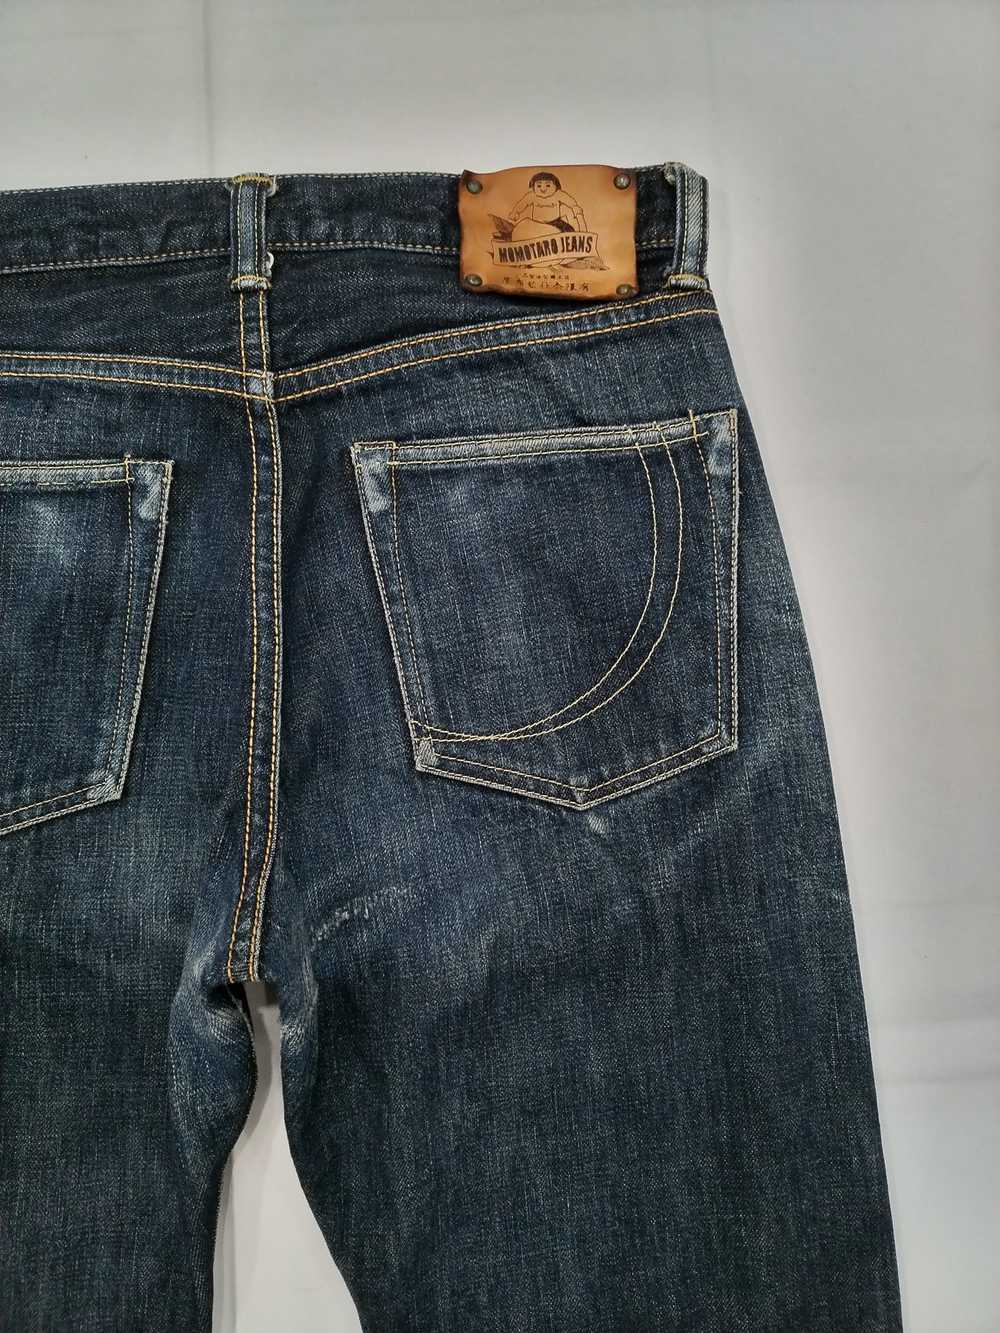 Japanese Brand × Momotaro Momotaro Selvedge Jeans - image 8